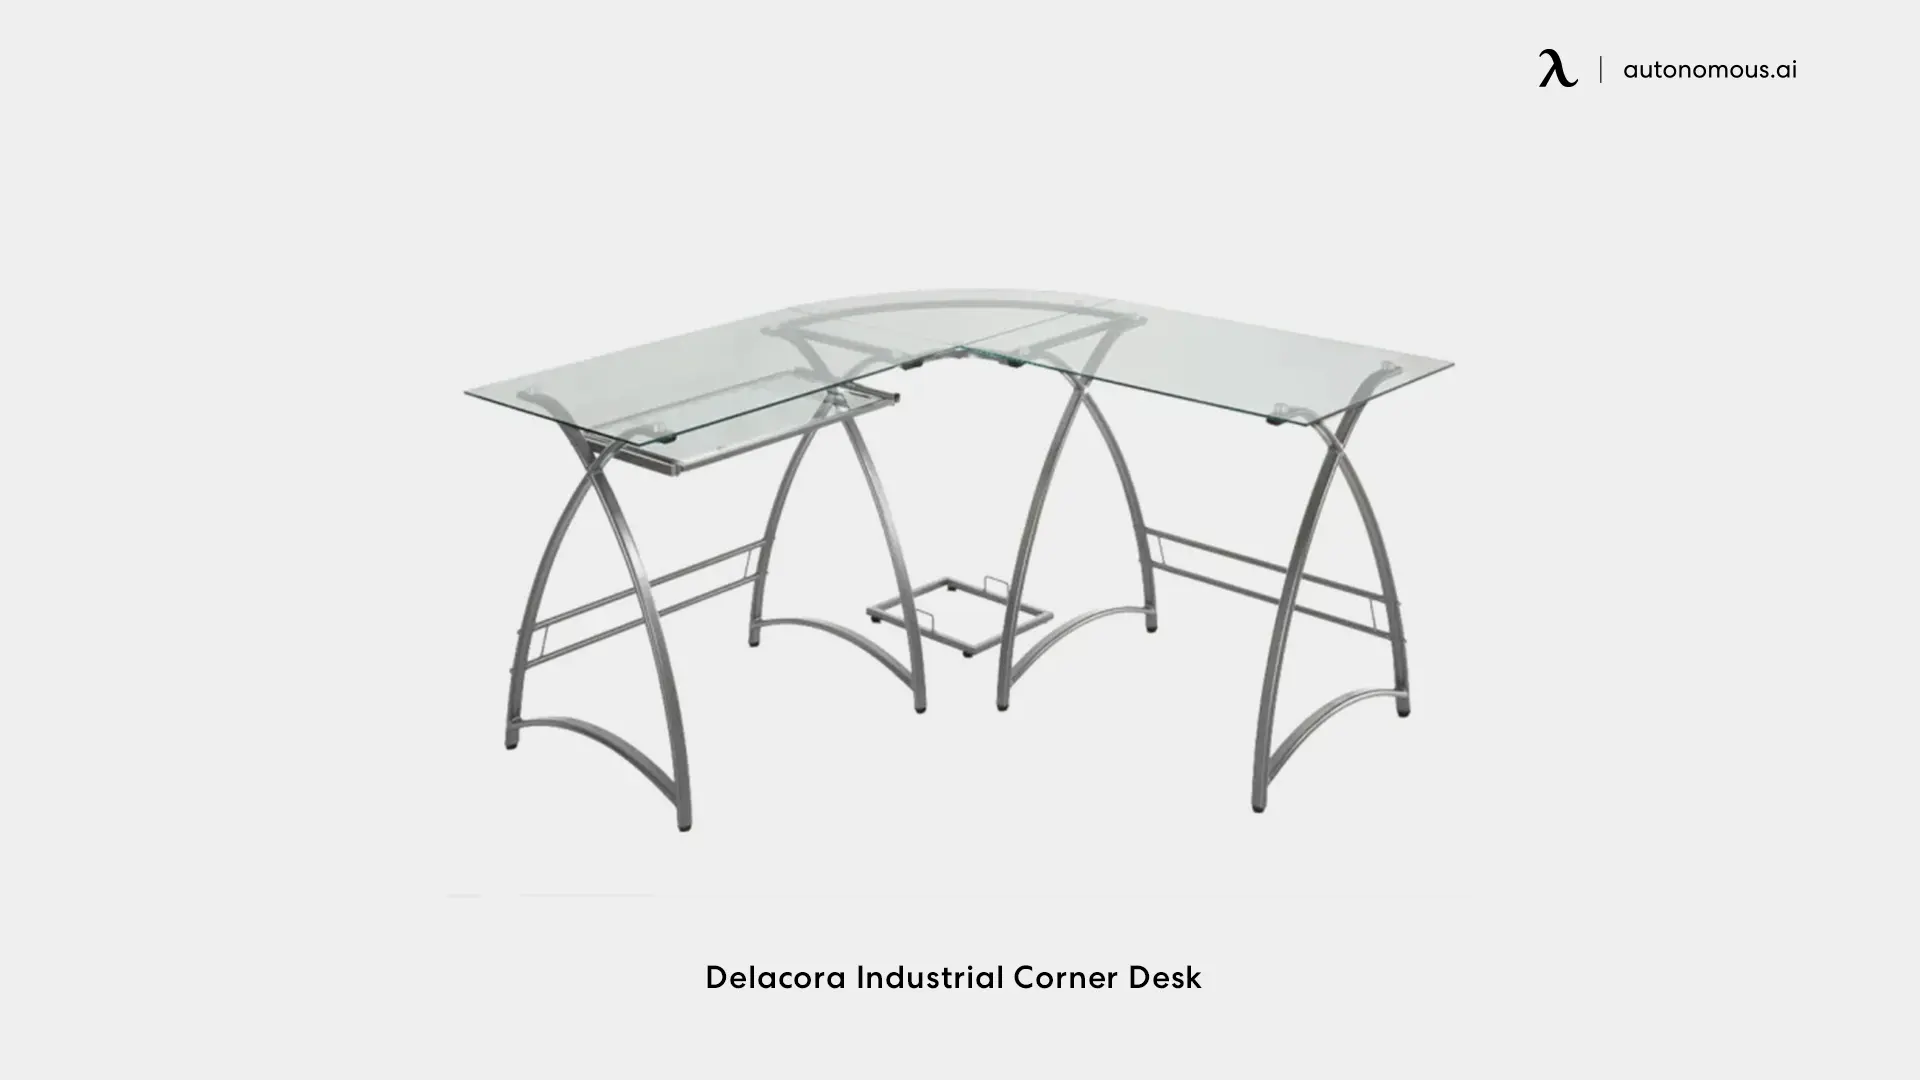 Delacora Industrial corner desk keyboard tray